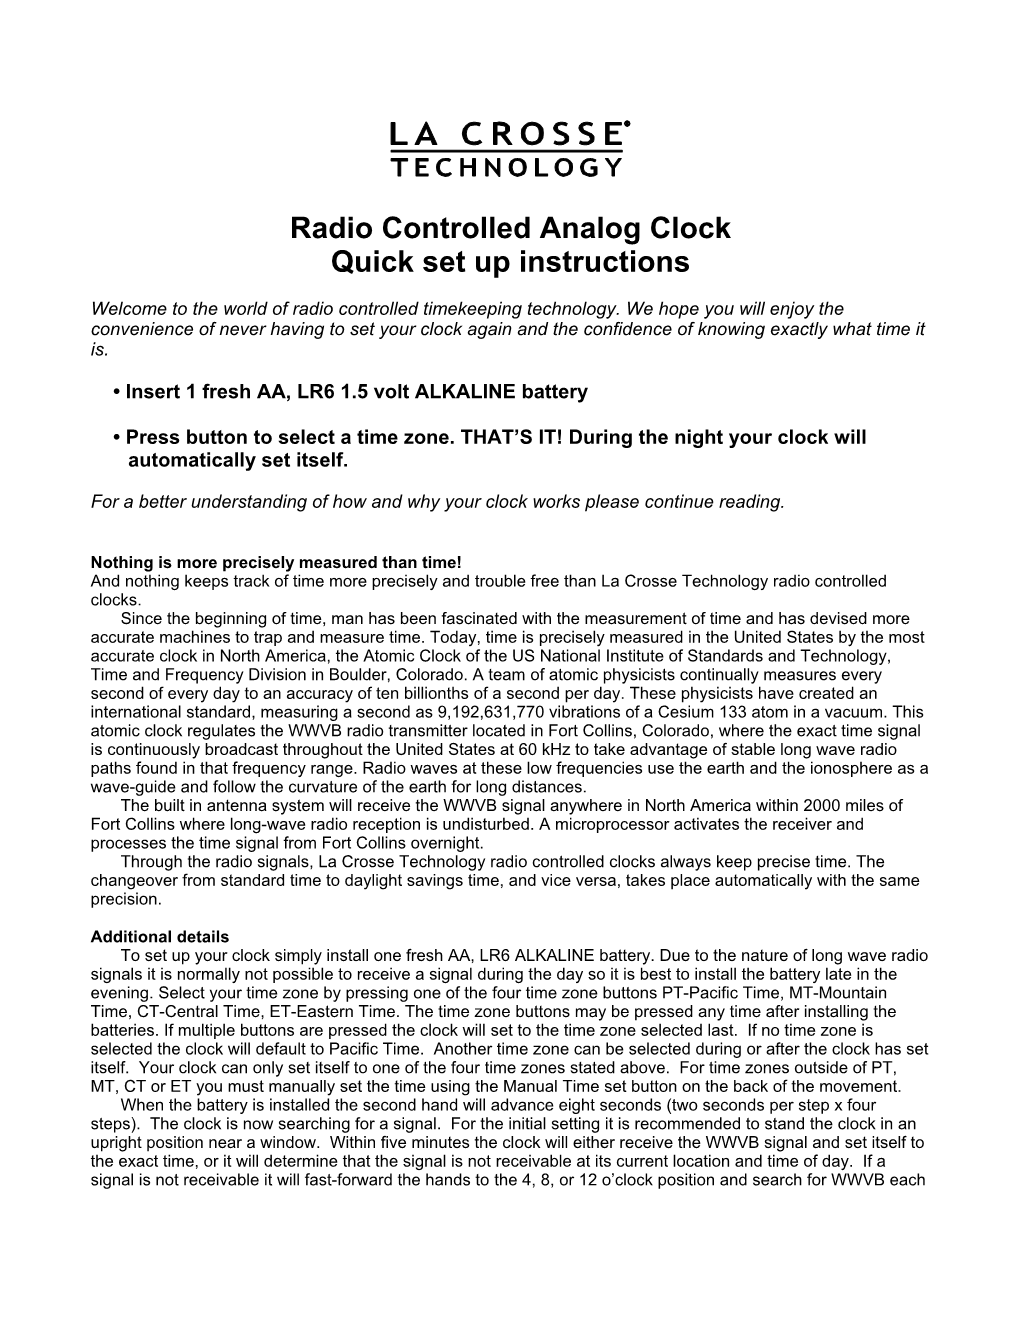 Radio Controlled Analog Clock Quick Set up Instructions